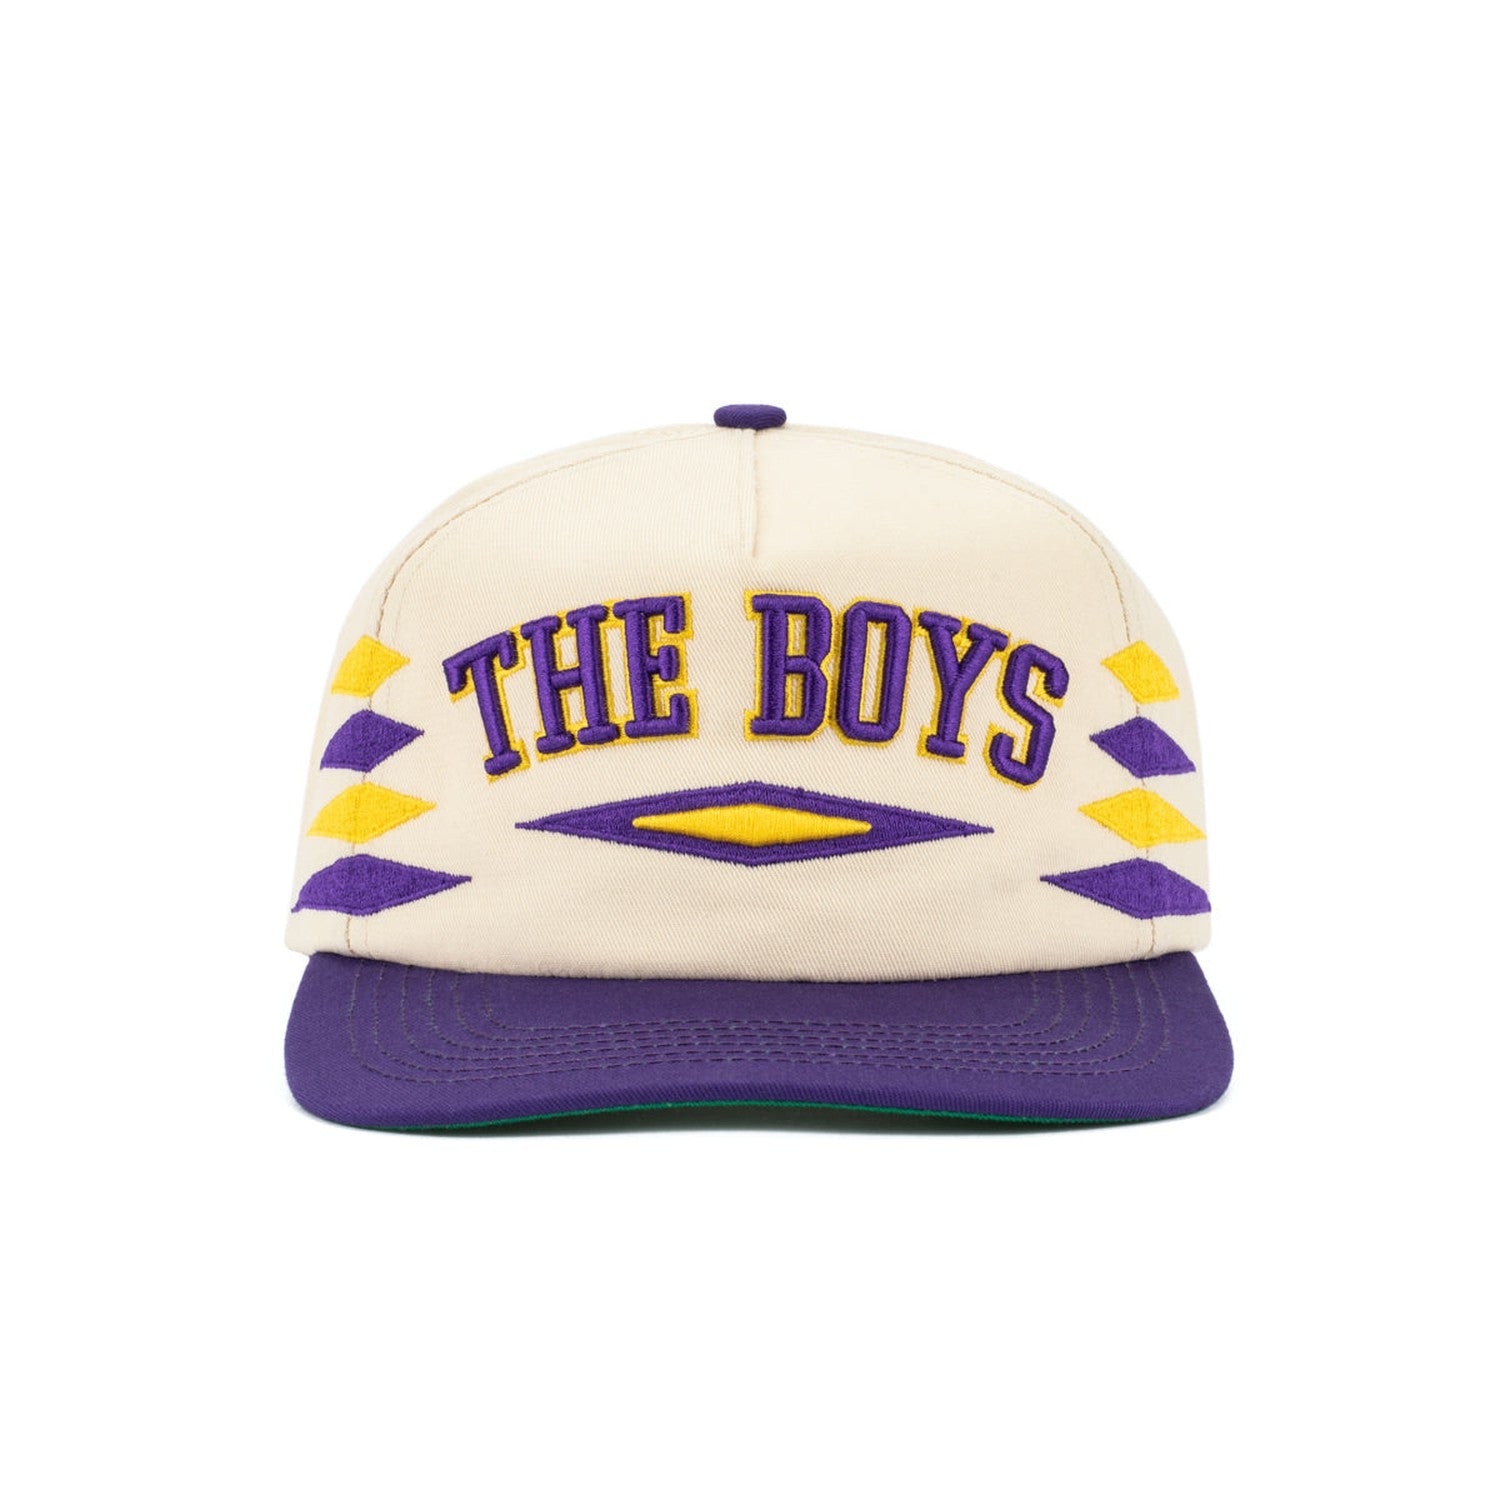 The Boys Diamond Retro Hat | Bussin' with The Boys Tan/Purple